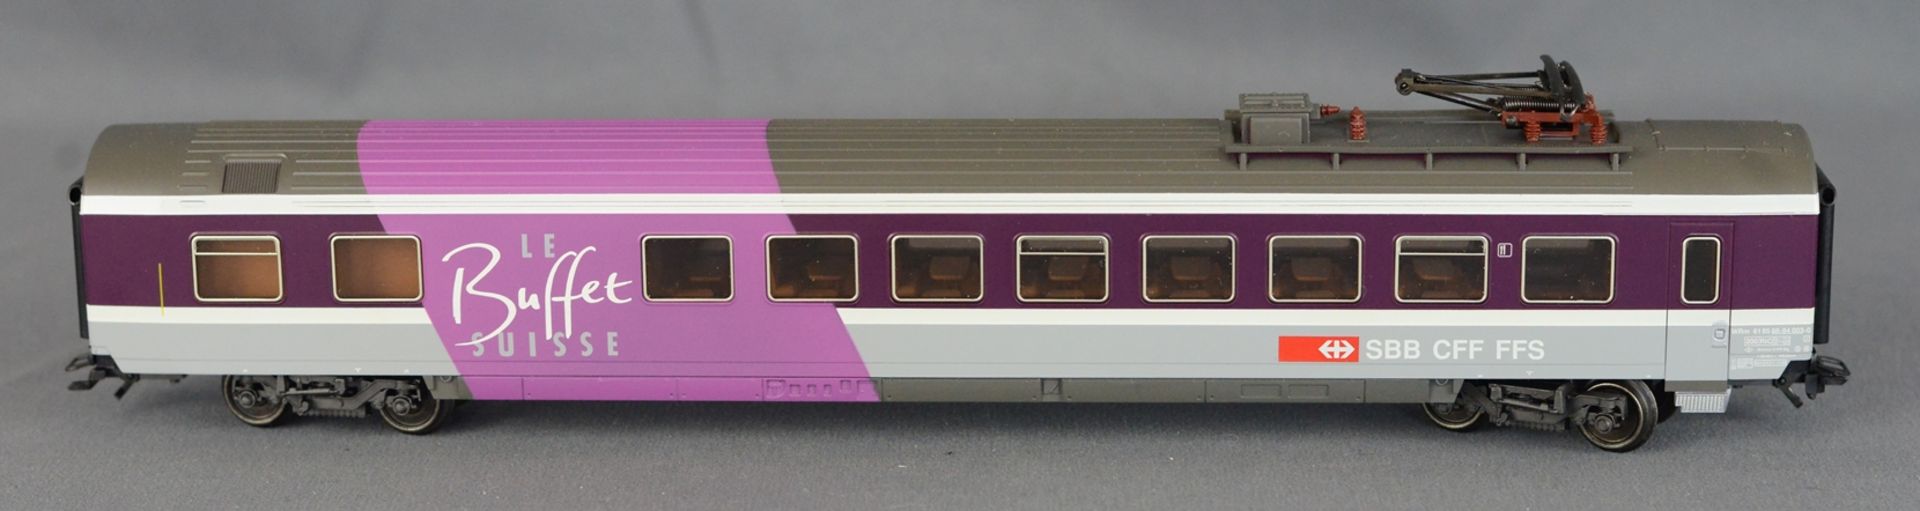 Märklin H0 4367 Wagenset Eurocity SBB, unbespielt und in OriginalverpackungMärklin H0 4367 wagon set - Image 3 of 6